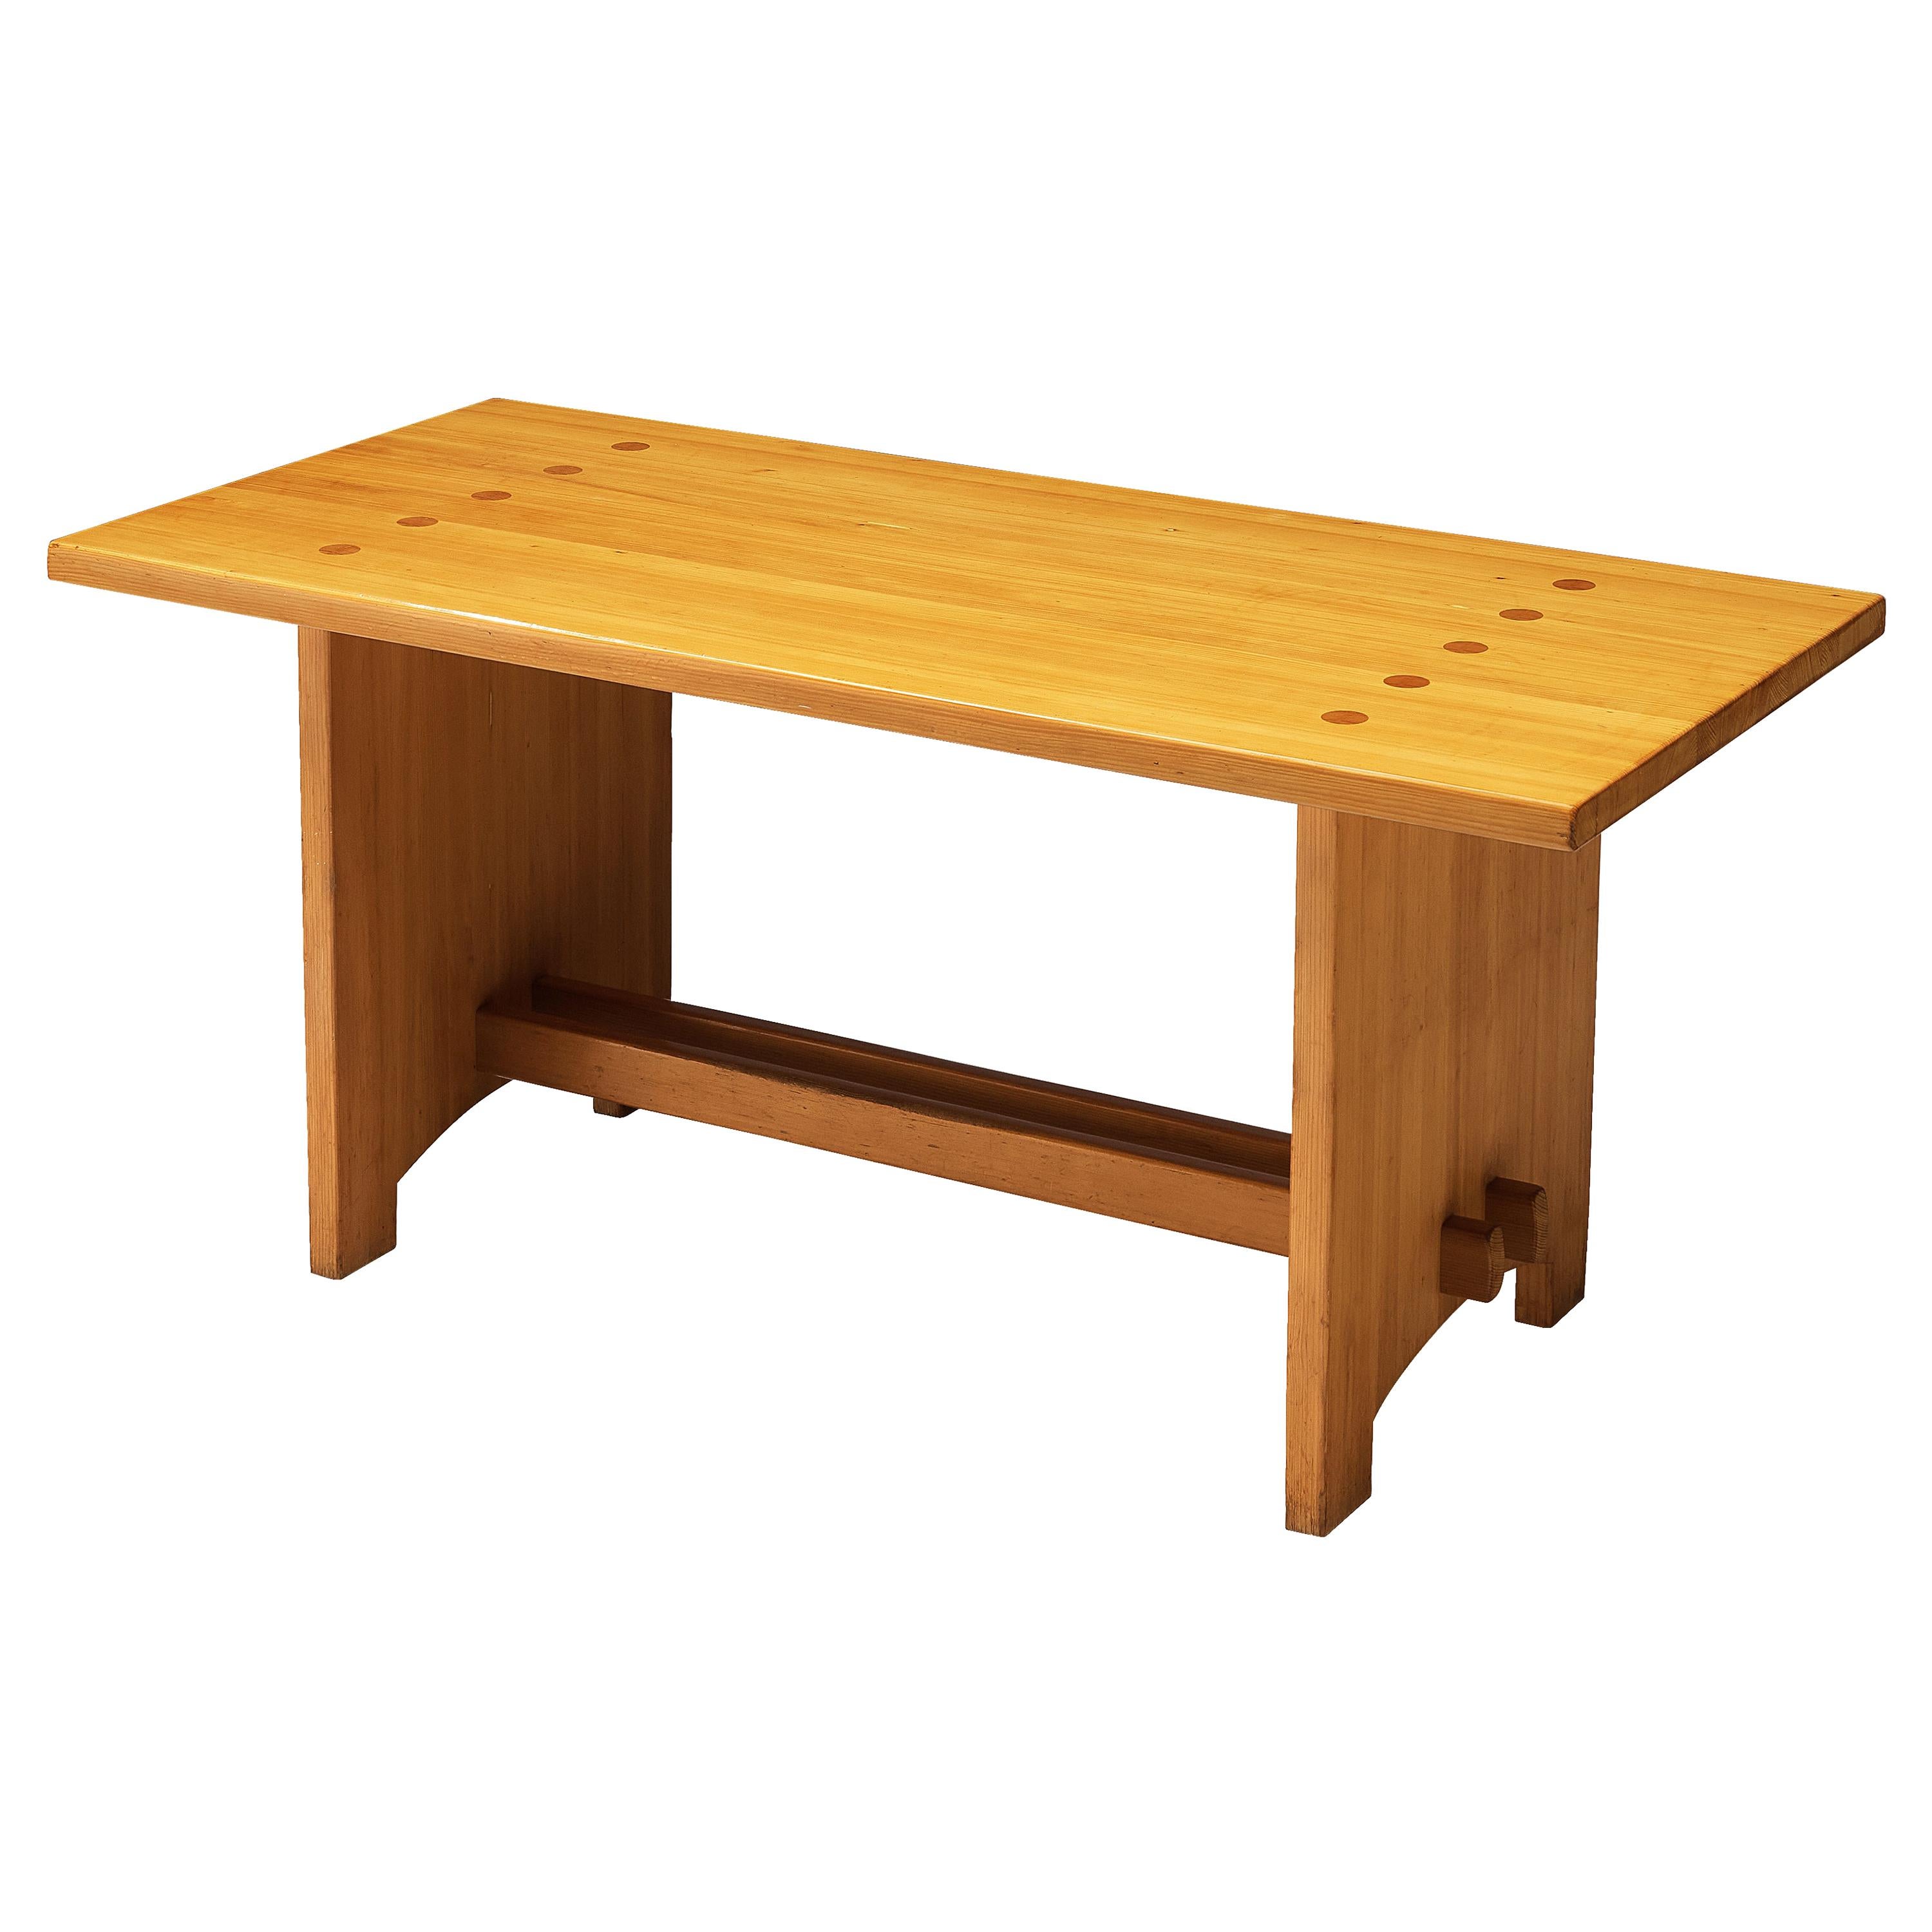 Jacob Kielland-Brandt Dining Table in Solid Pine